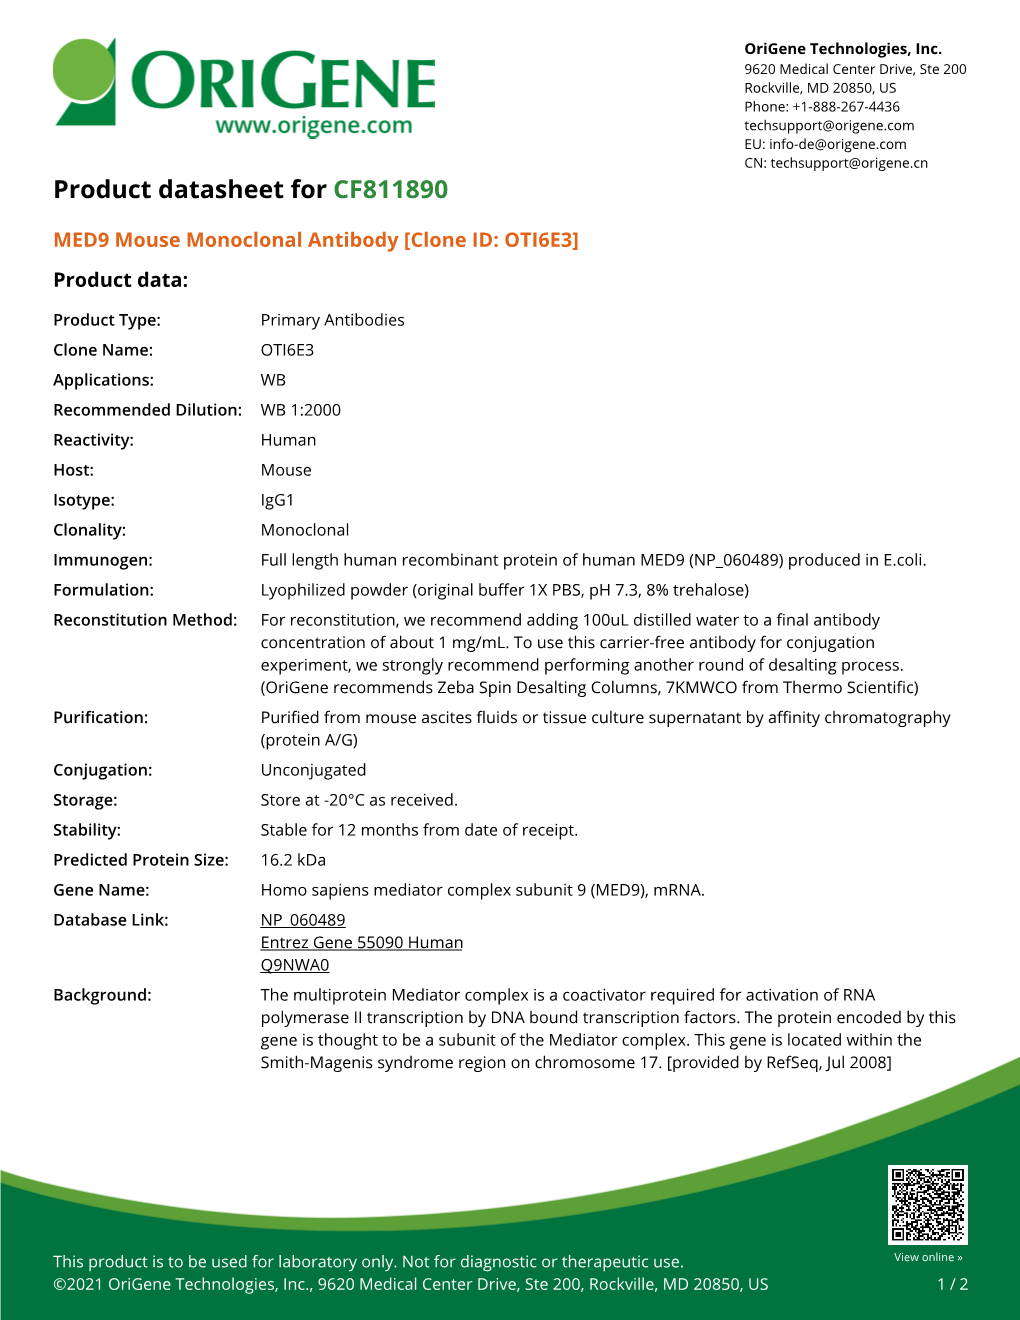 MED9 Mouse Monoclonal Antibody [Clone ID: OTI6E3] Product Data